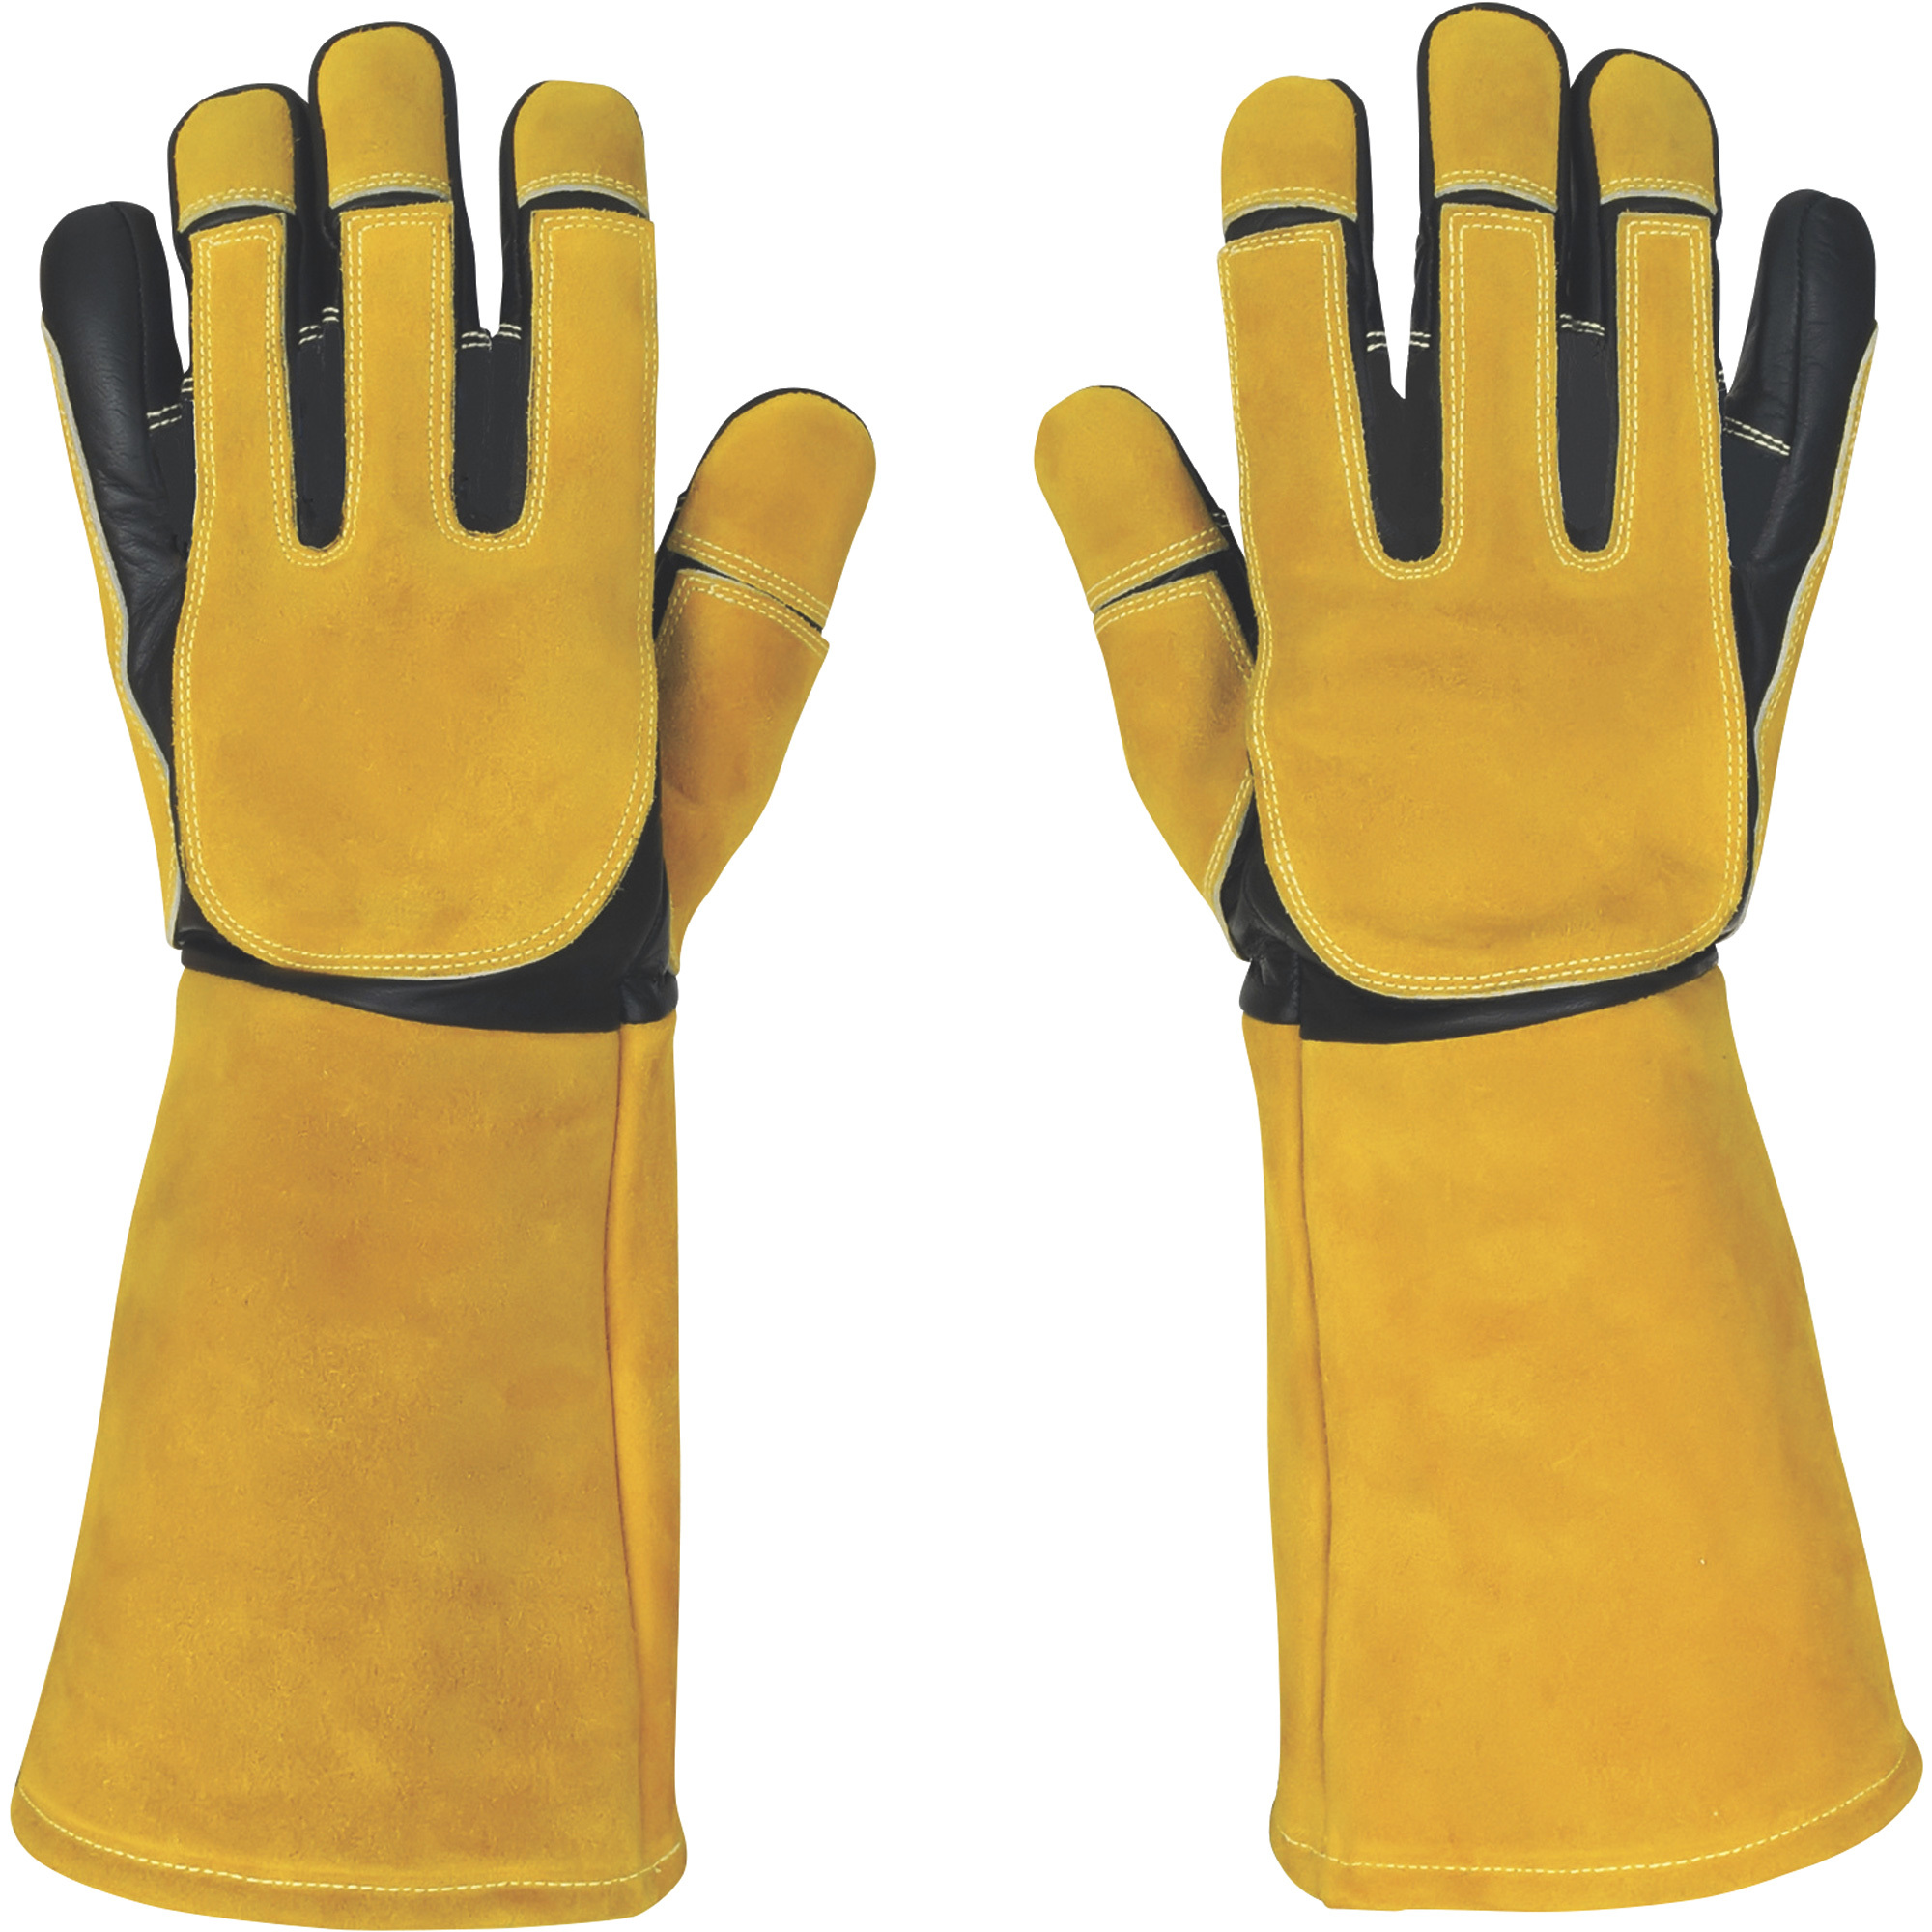 Klutch Cut-Resistant Goatskin/Cowhide MIG Welding Gloves â Single Pair, Gold/Black, Medium